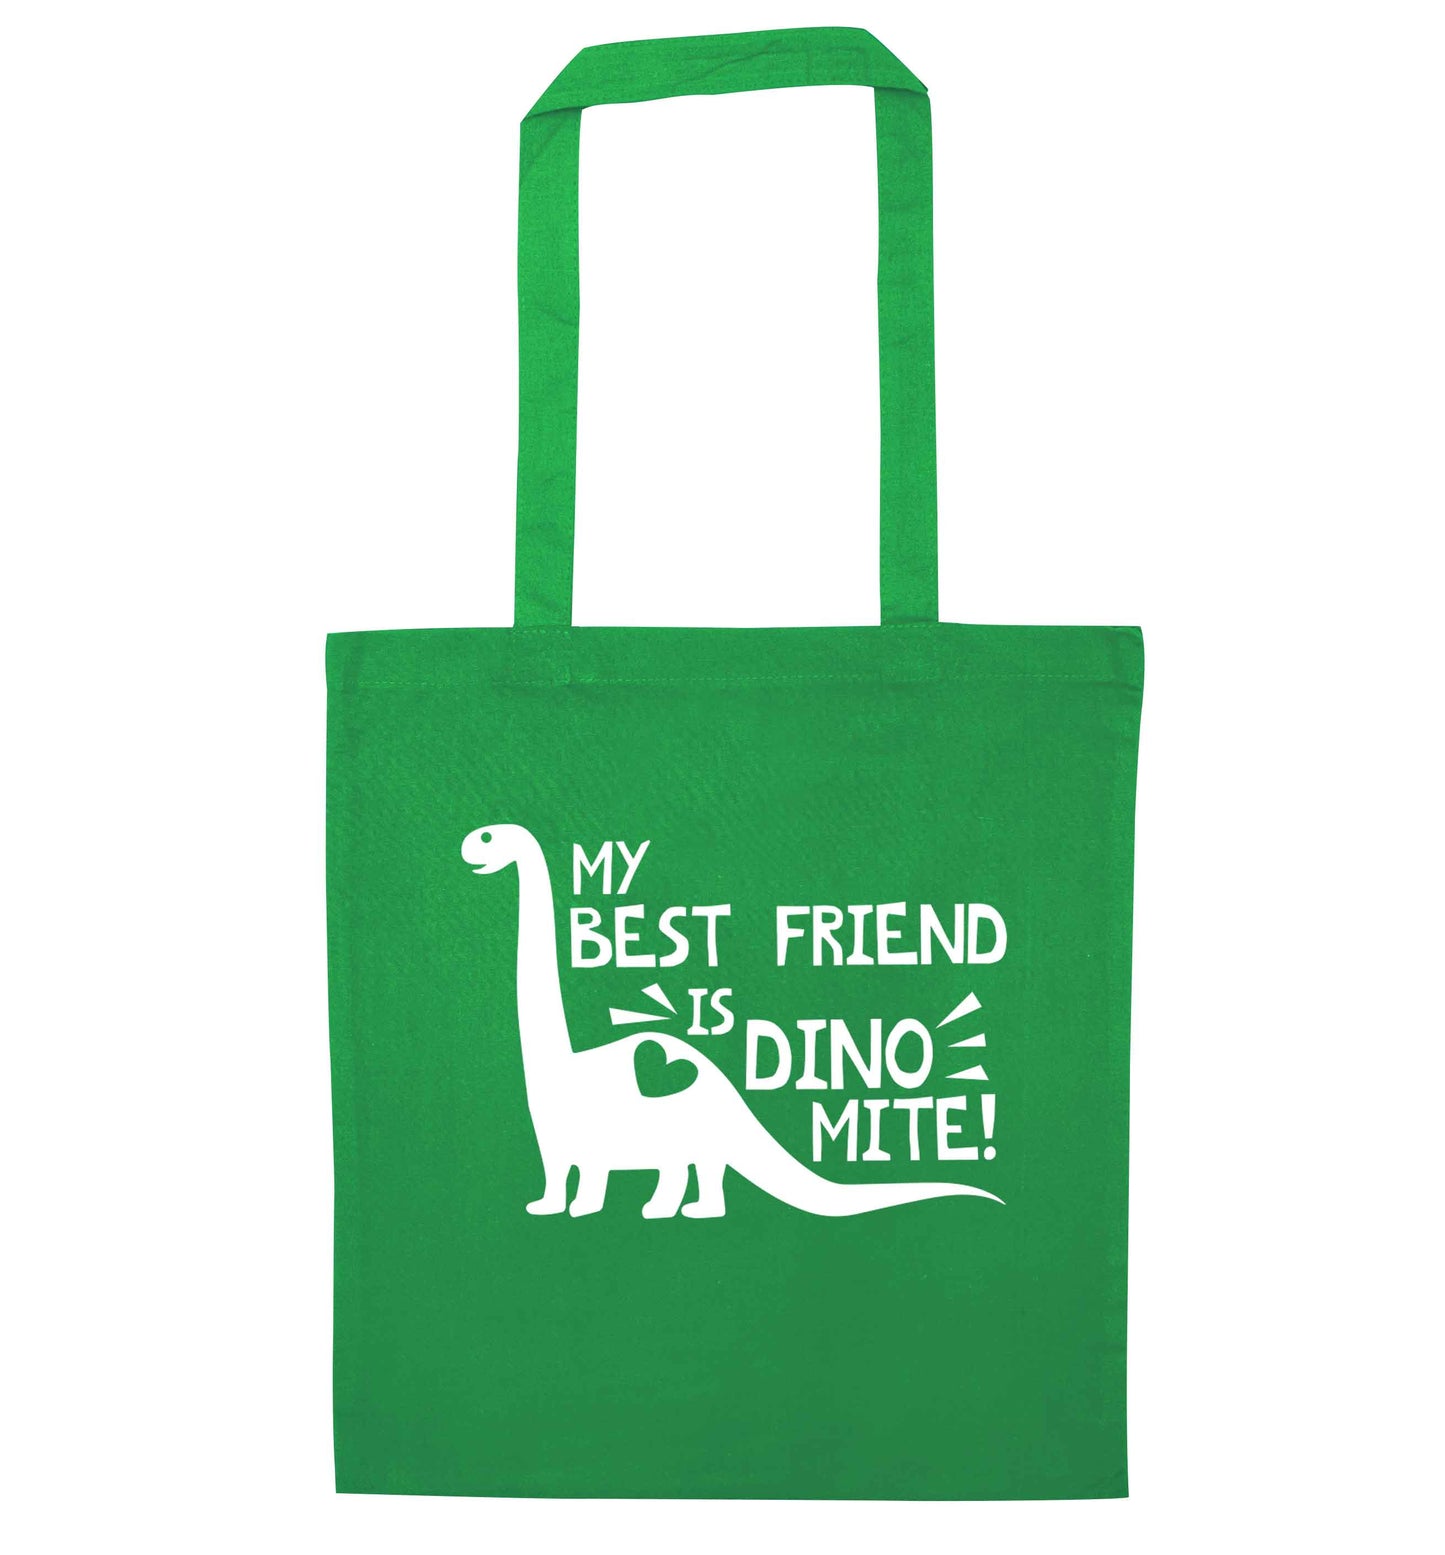 My best friend is dinomite! green tote bag